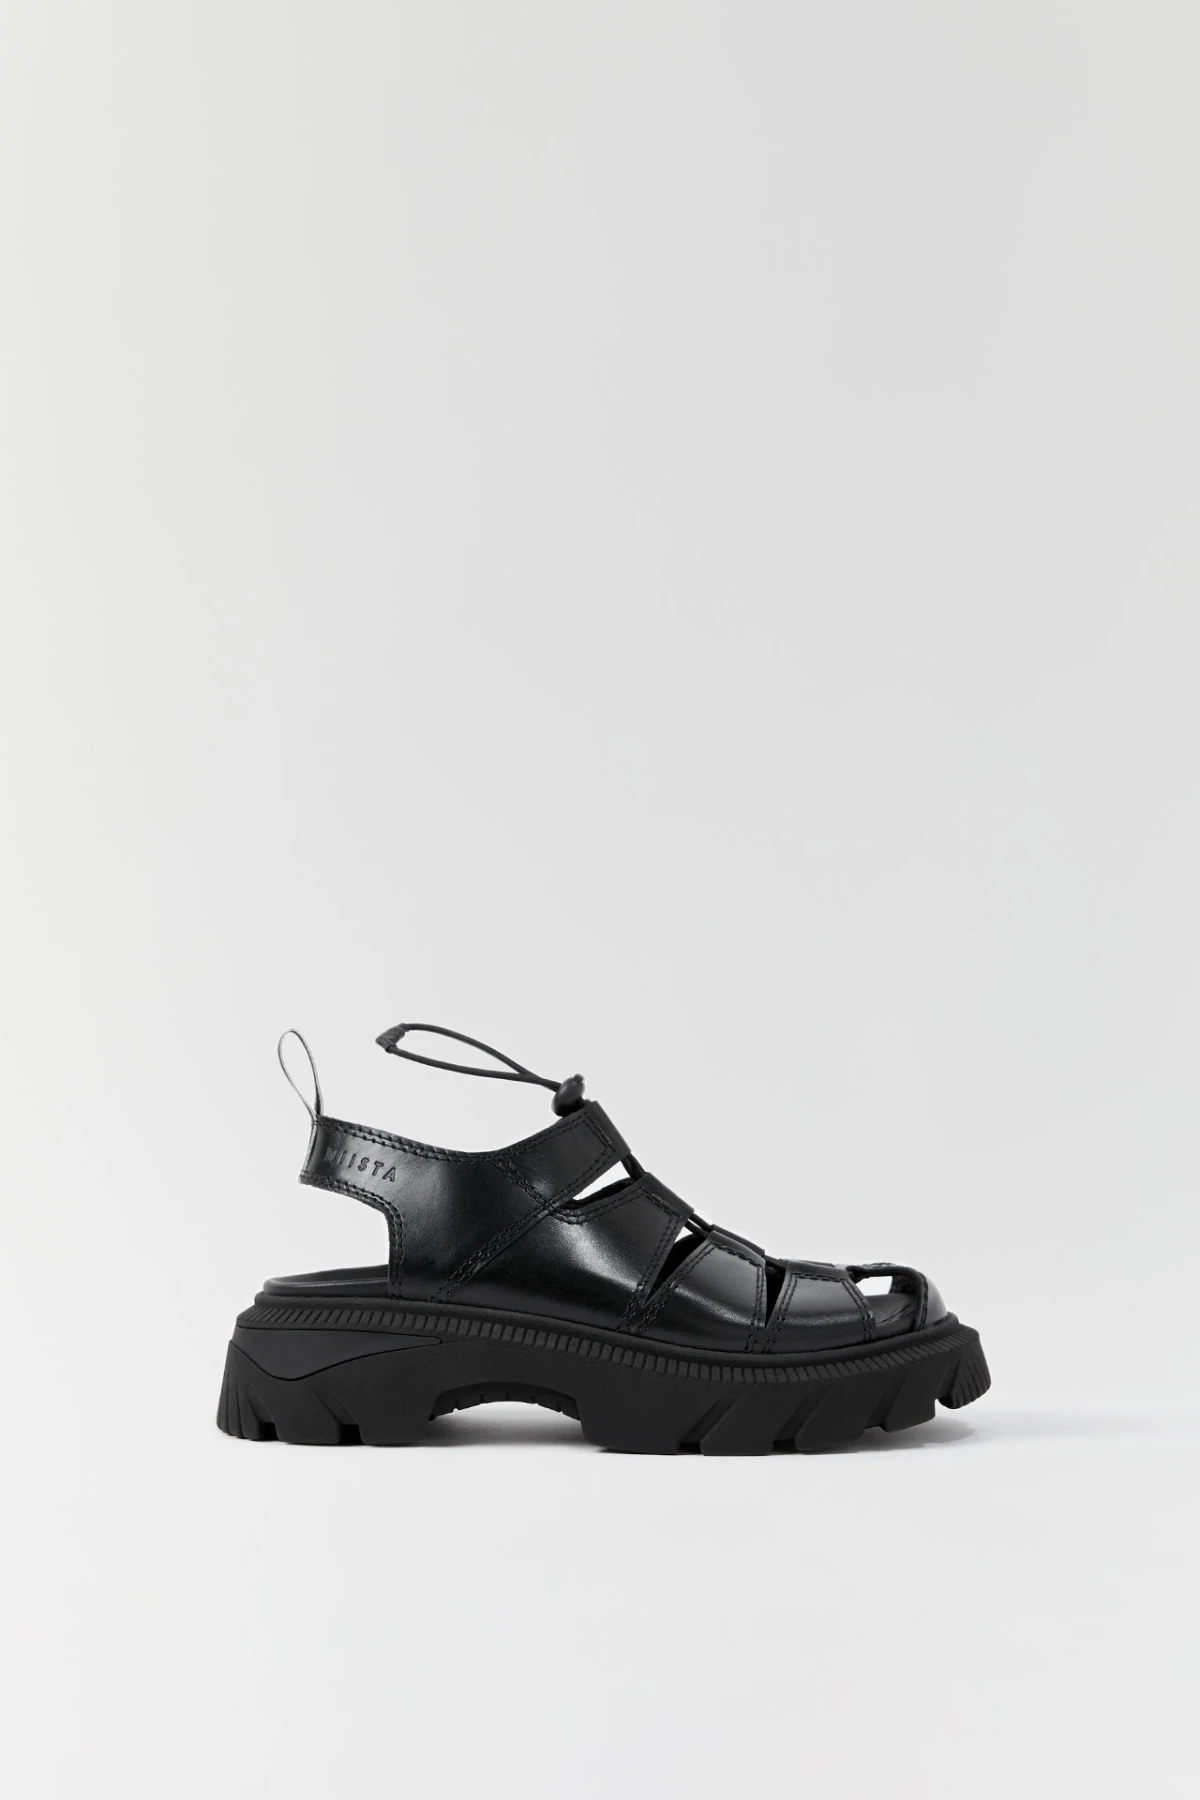 Eunice Black Sandals | Miista Europe | Made in Portugal